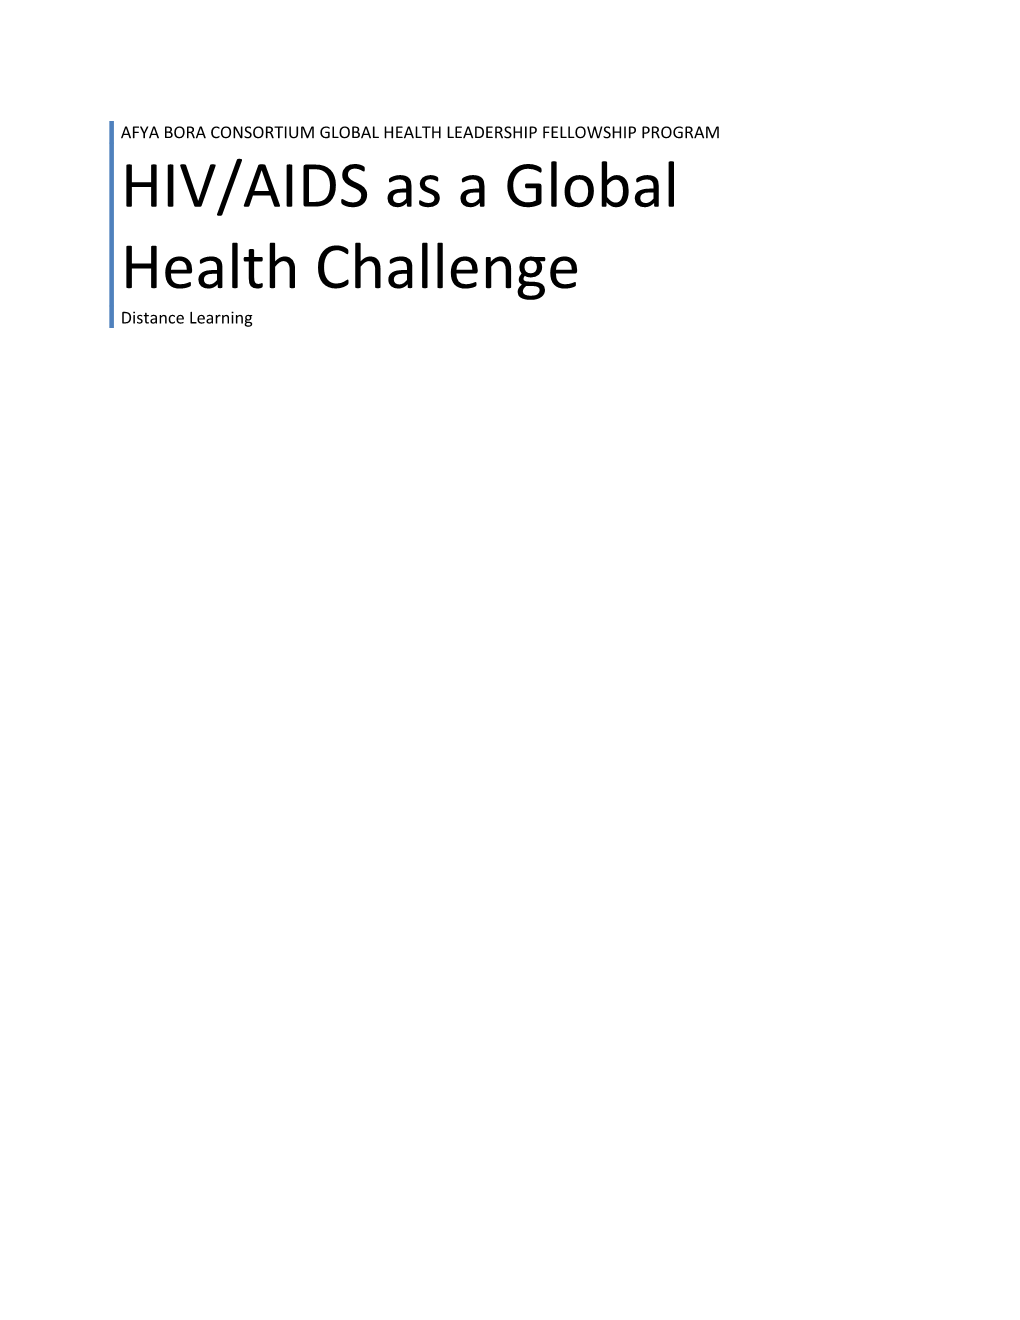 HIV/AIDS As a Global Health Challenge